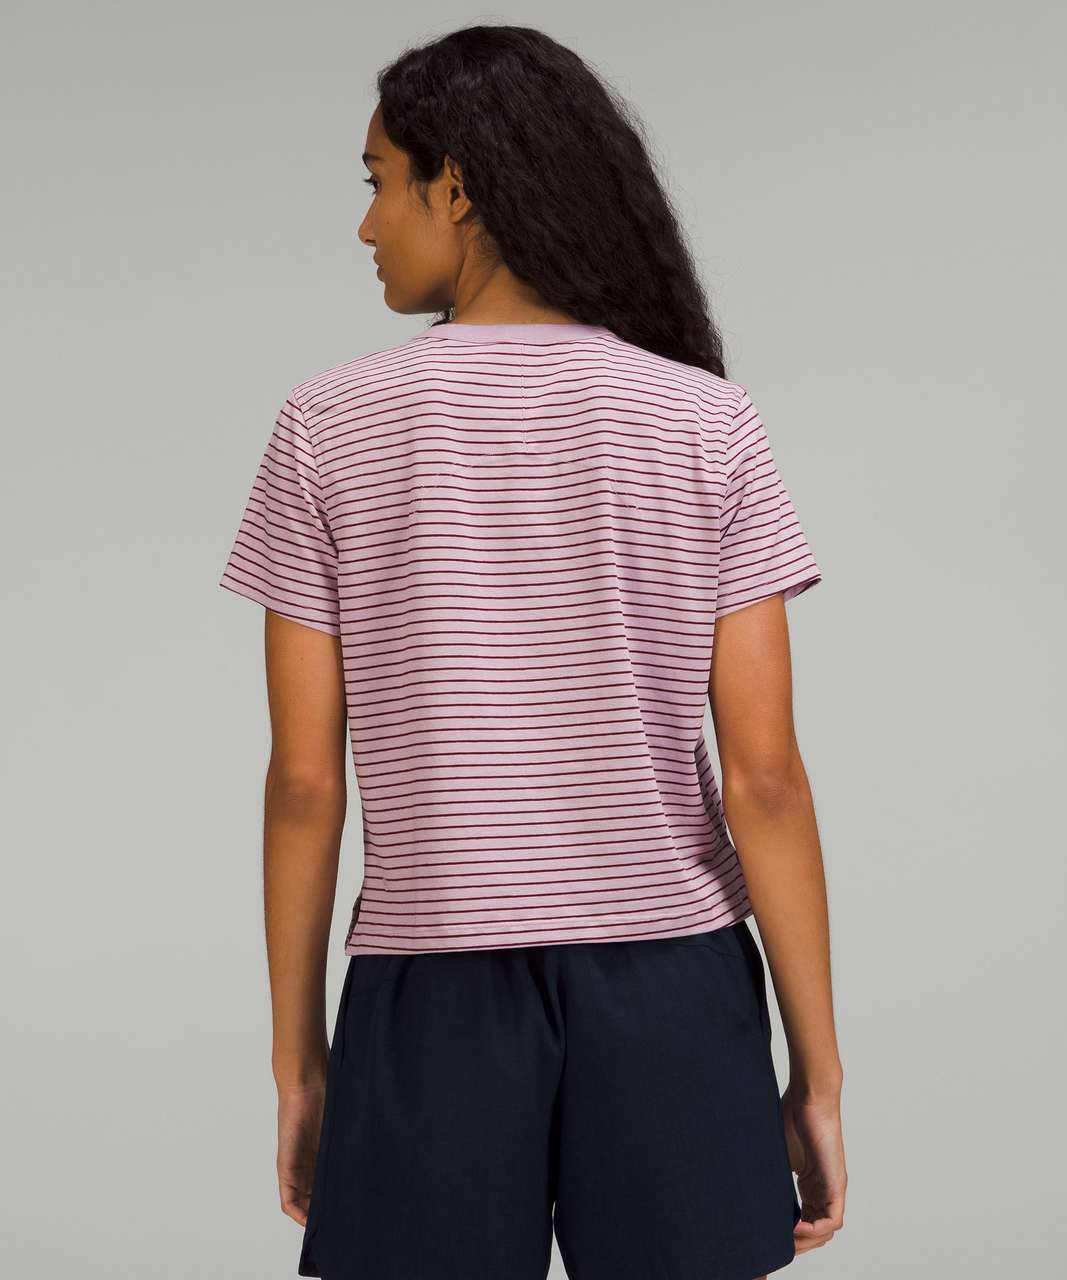 Lululemon Classic-Fit Cotton-Blend T-Shirt - Parallel Stripe Dusty Rose Red Merlot